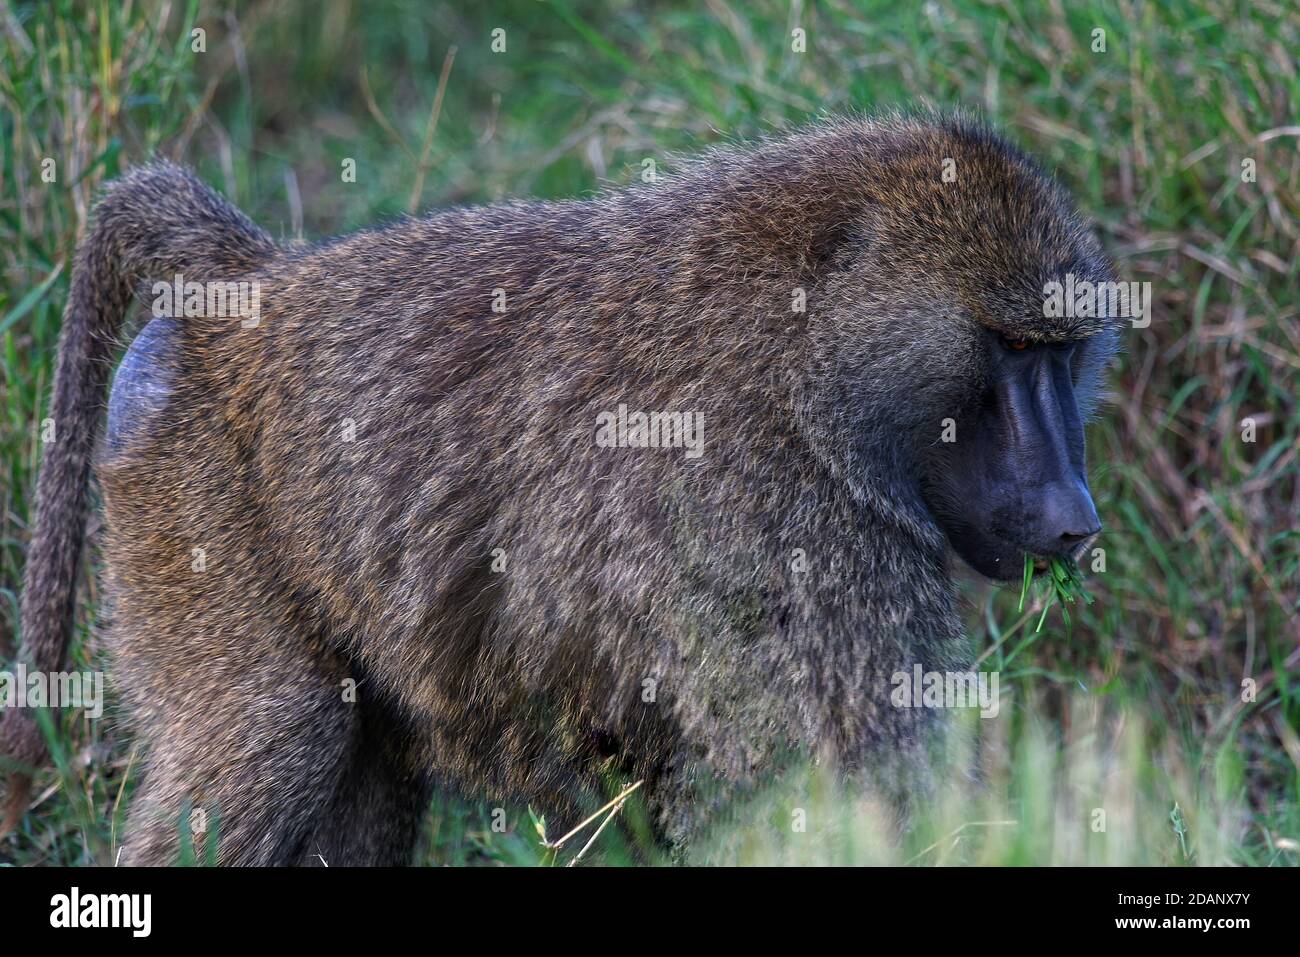 Olive baboon eating grass, close-up, Papiocynocephalus anubis, Old World Monkey, primate, wildlife, animal, nature, Serengeti National Park, Tanzania, Stock Photo